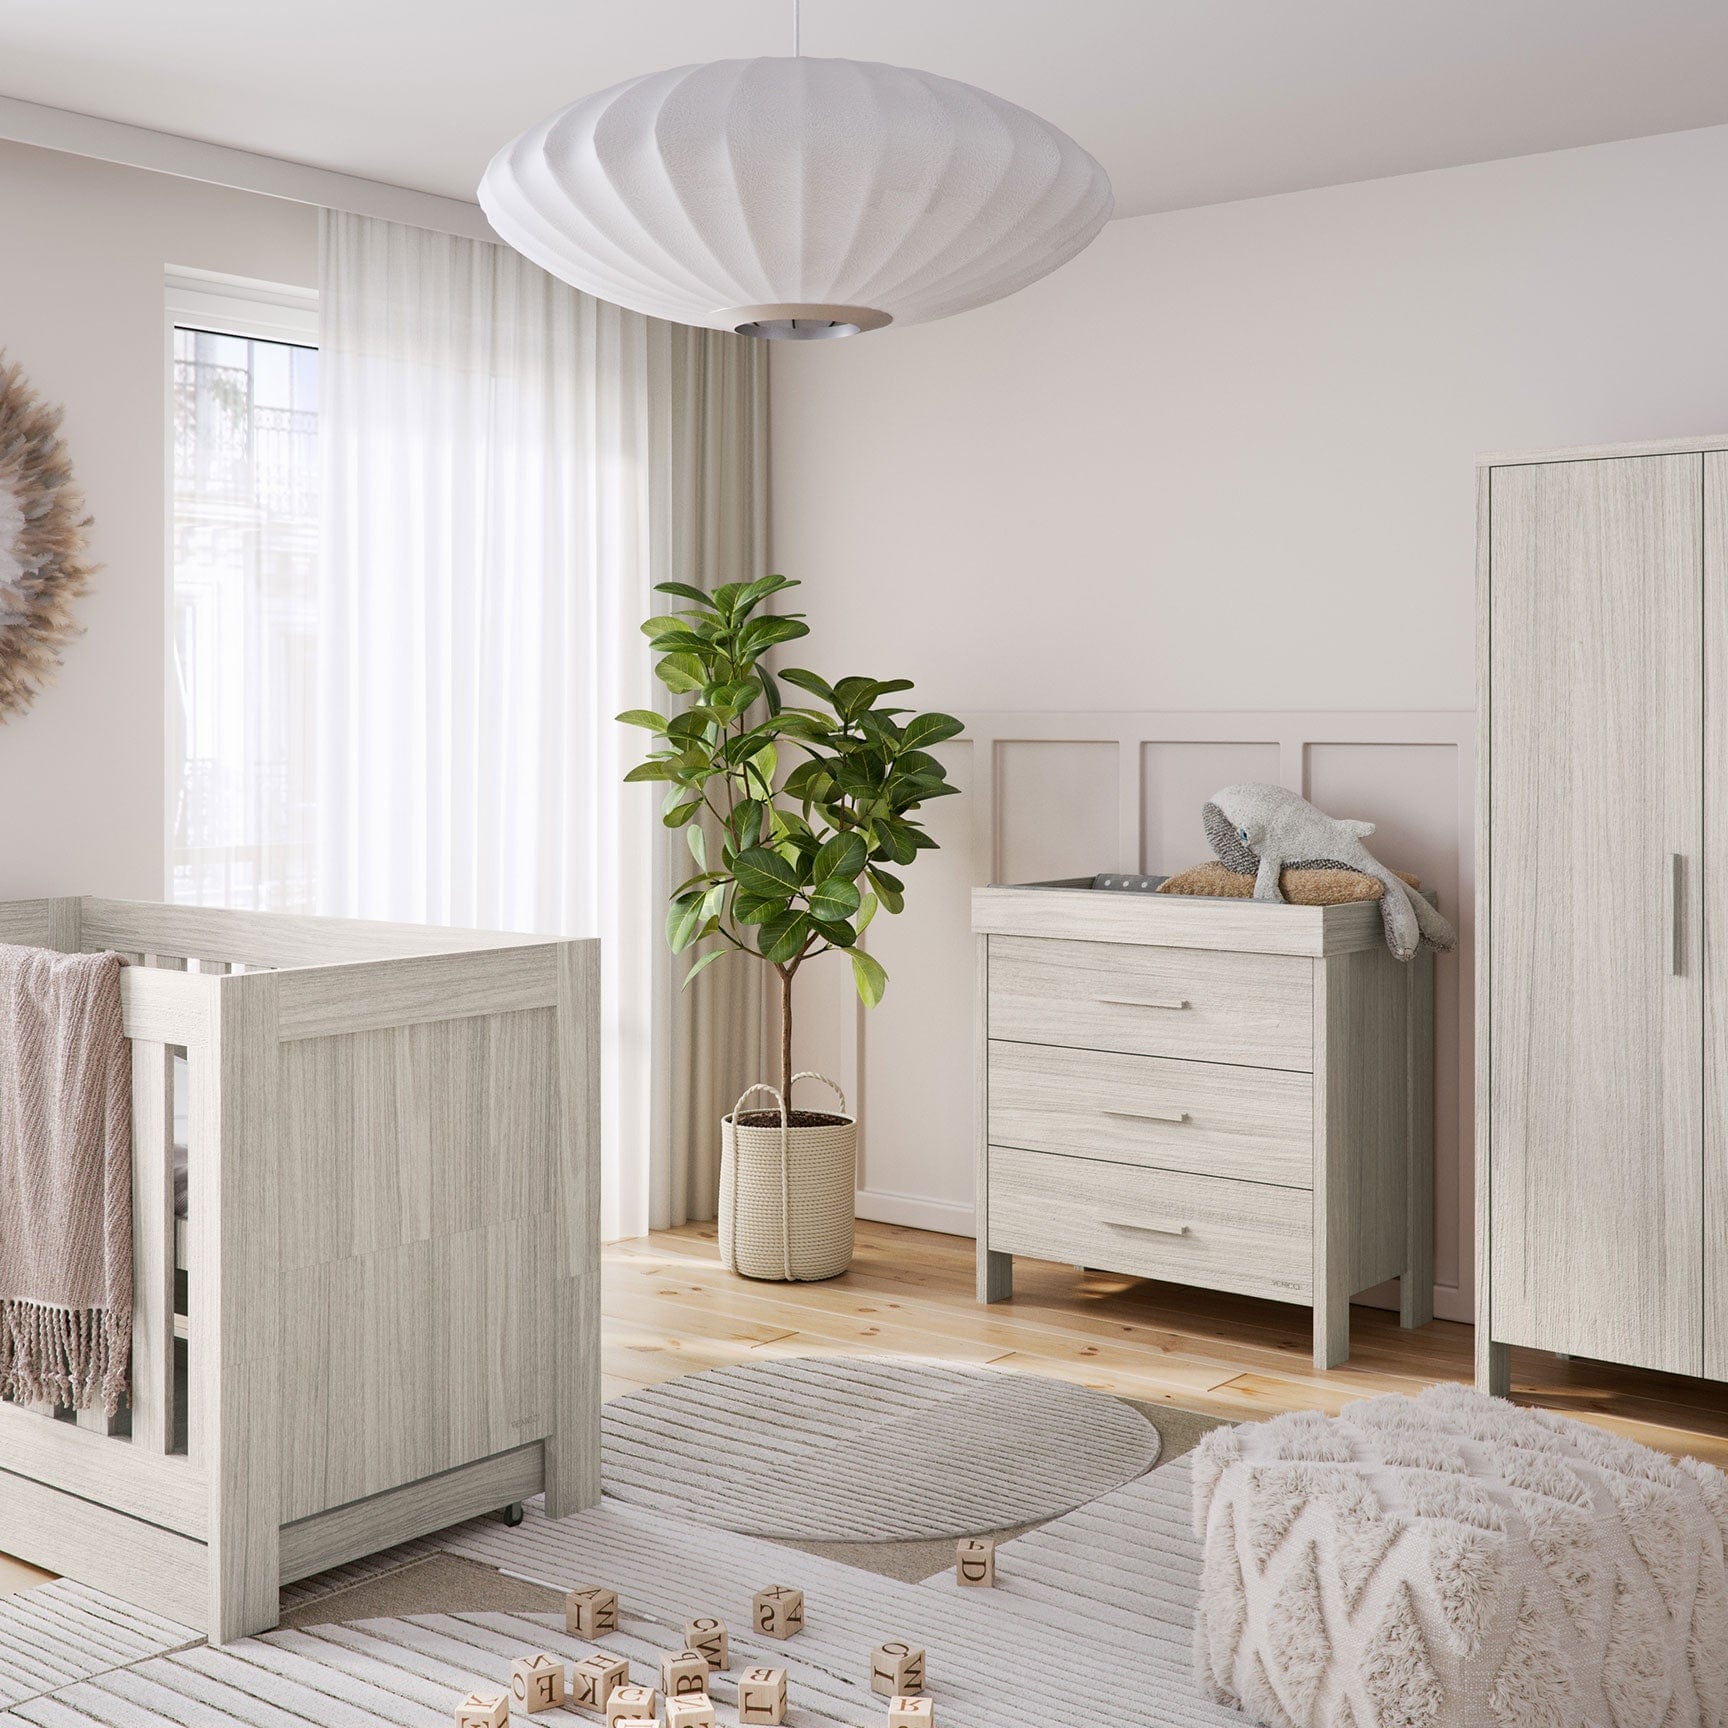 Venicci Forenzo 2 Piece Wardrobe Roomset in Nordic White Nursery Room Sets